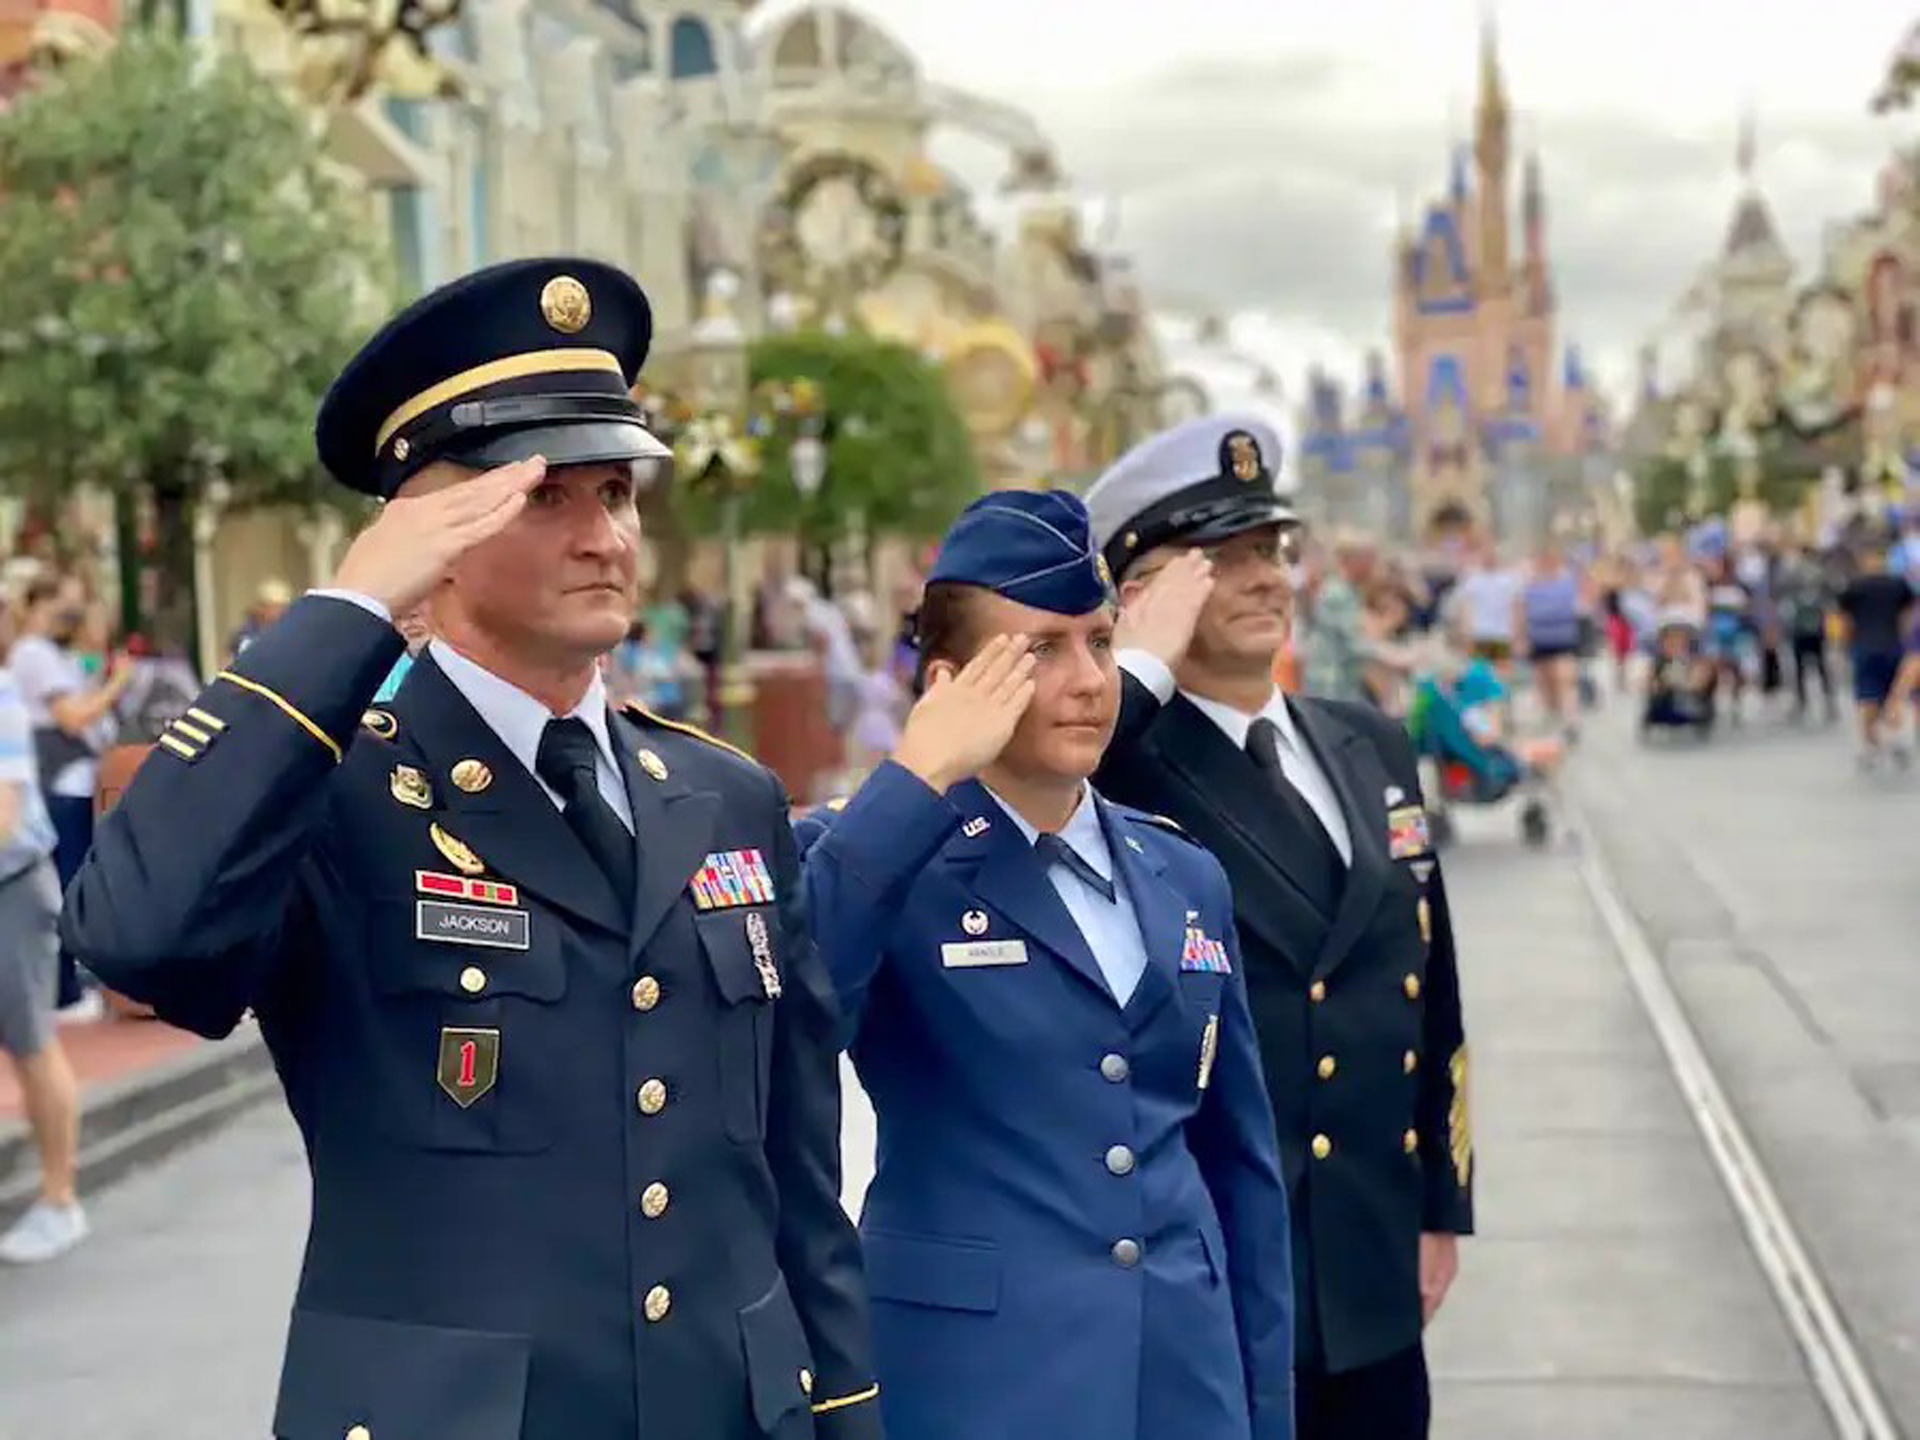 Service men and women saluting on Main Street U.S.A. at Disney’s Magic Kingdom Park.